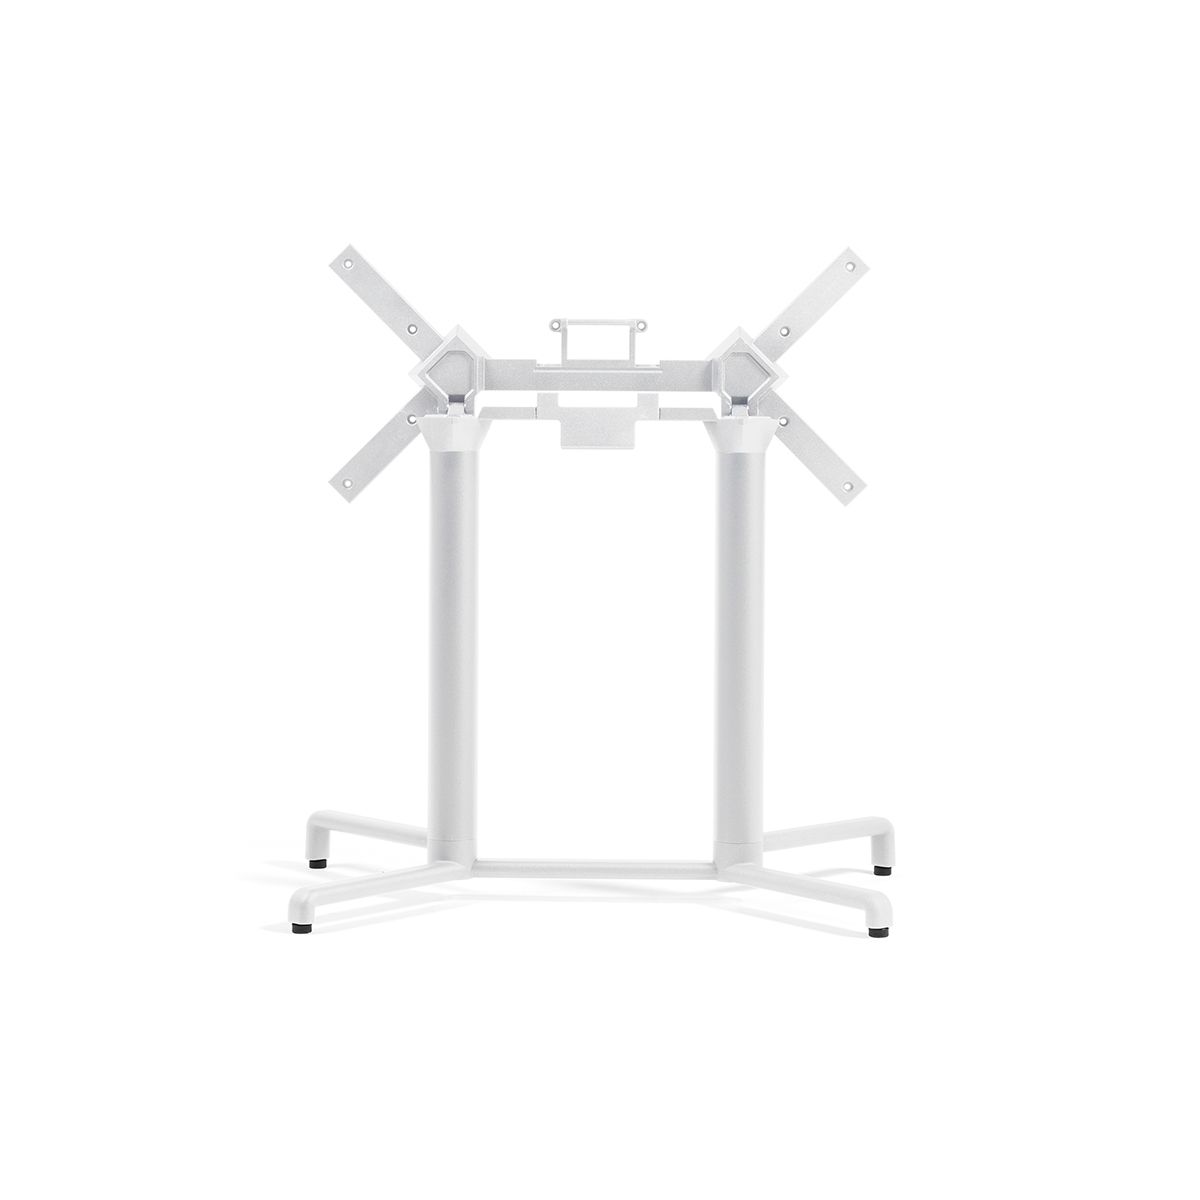 Klappbares Doppelsäulen-Tischgestell NARDI SCUDO DOUBLE (Aluminium), 4 Zehen